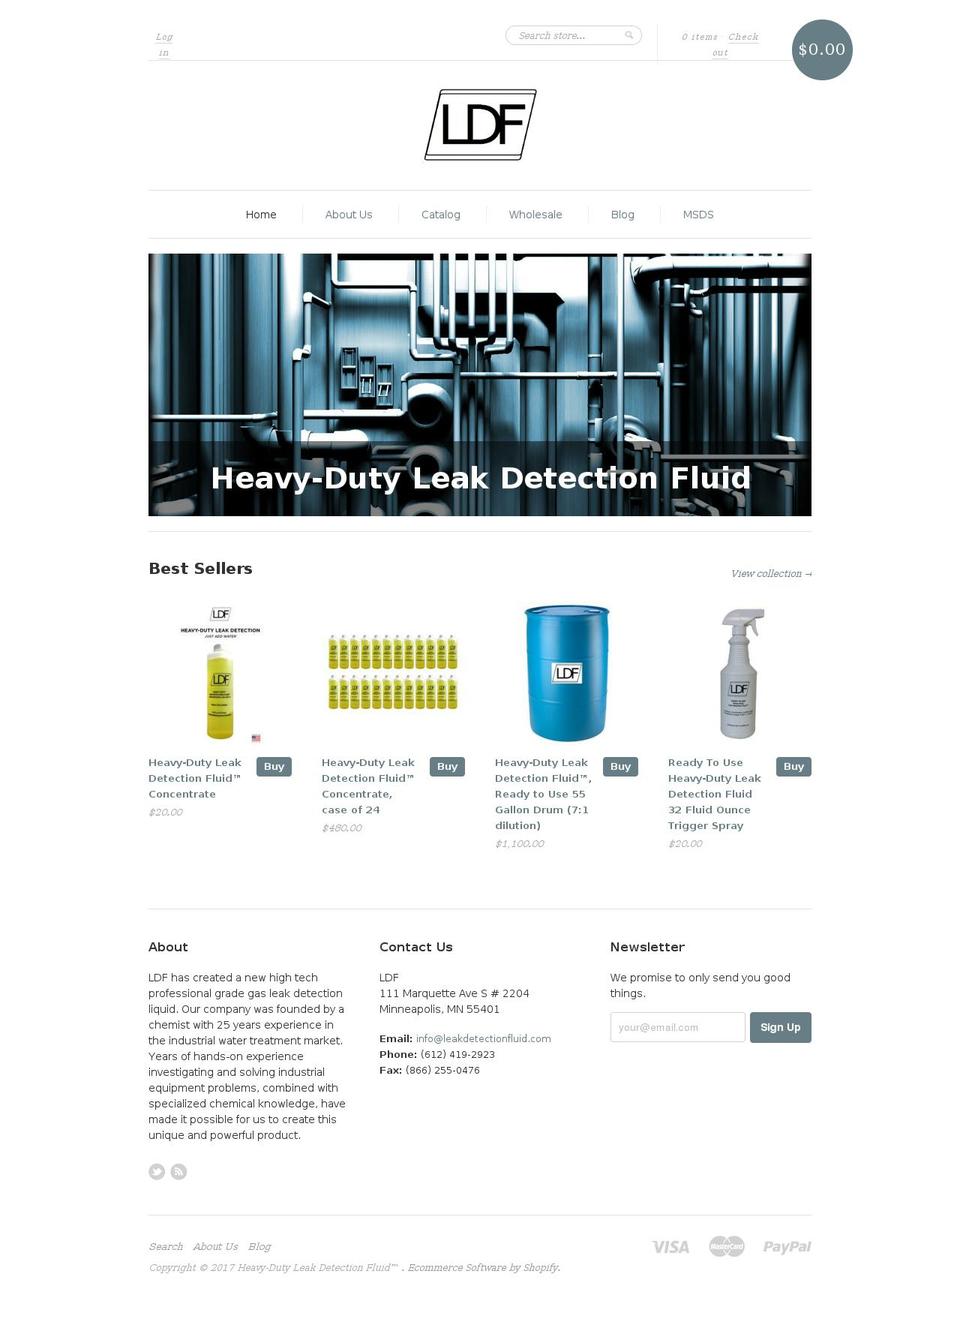 leakdetectionfluid.com shopify website screenshot